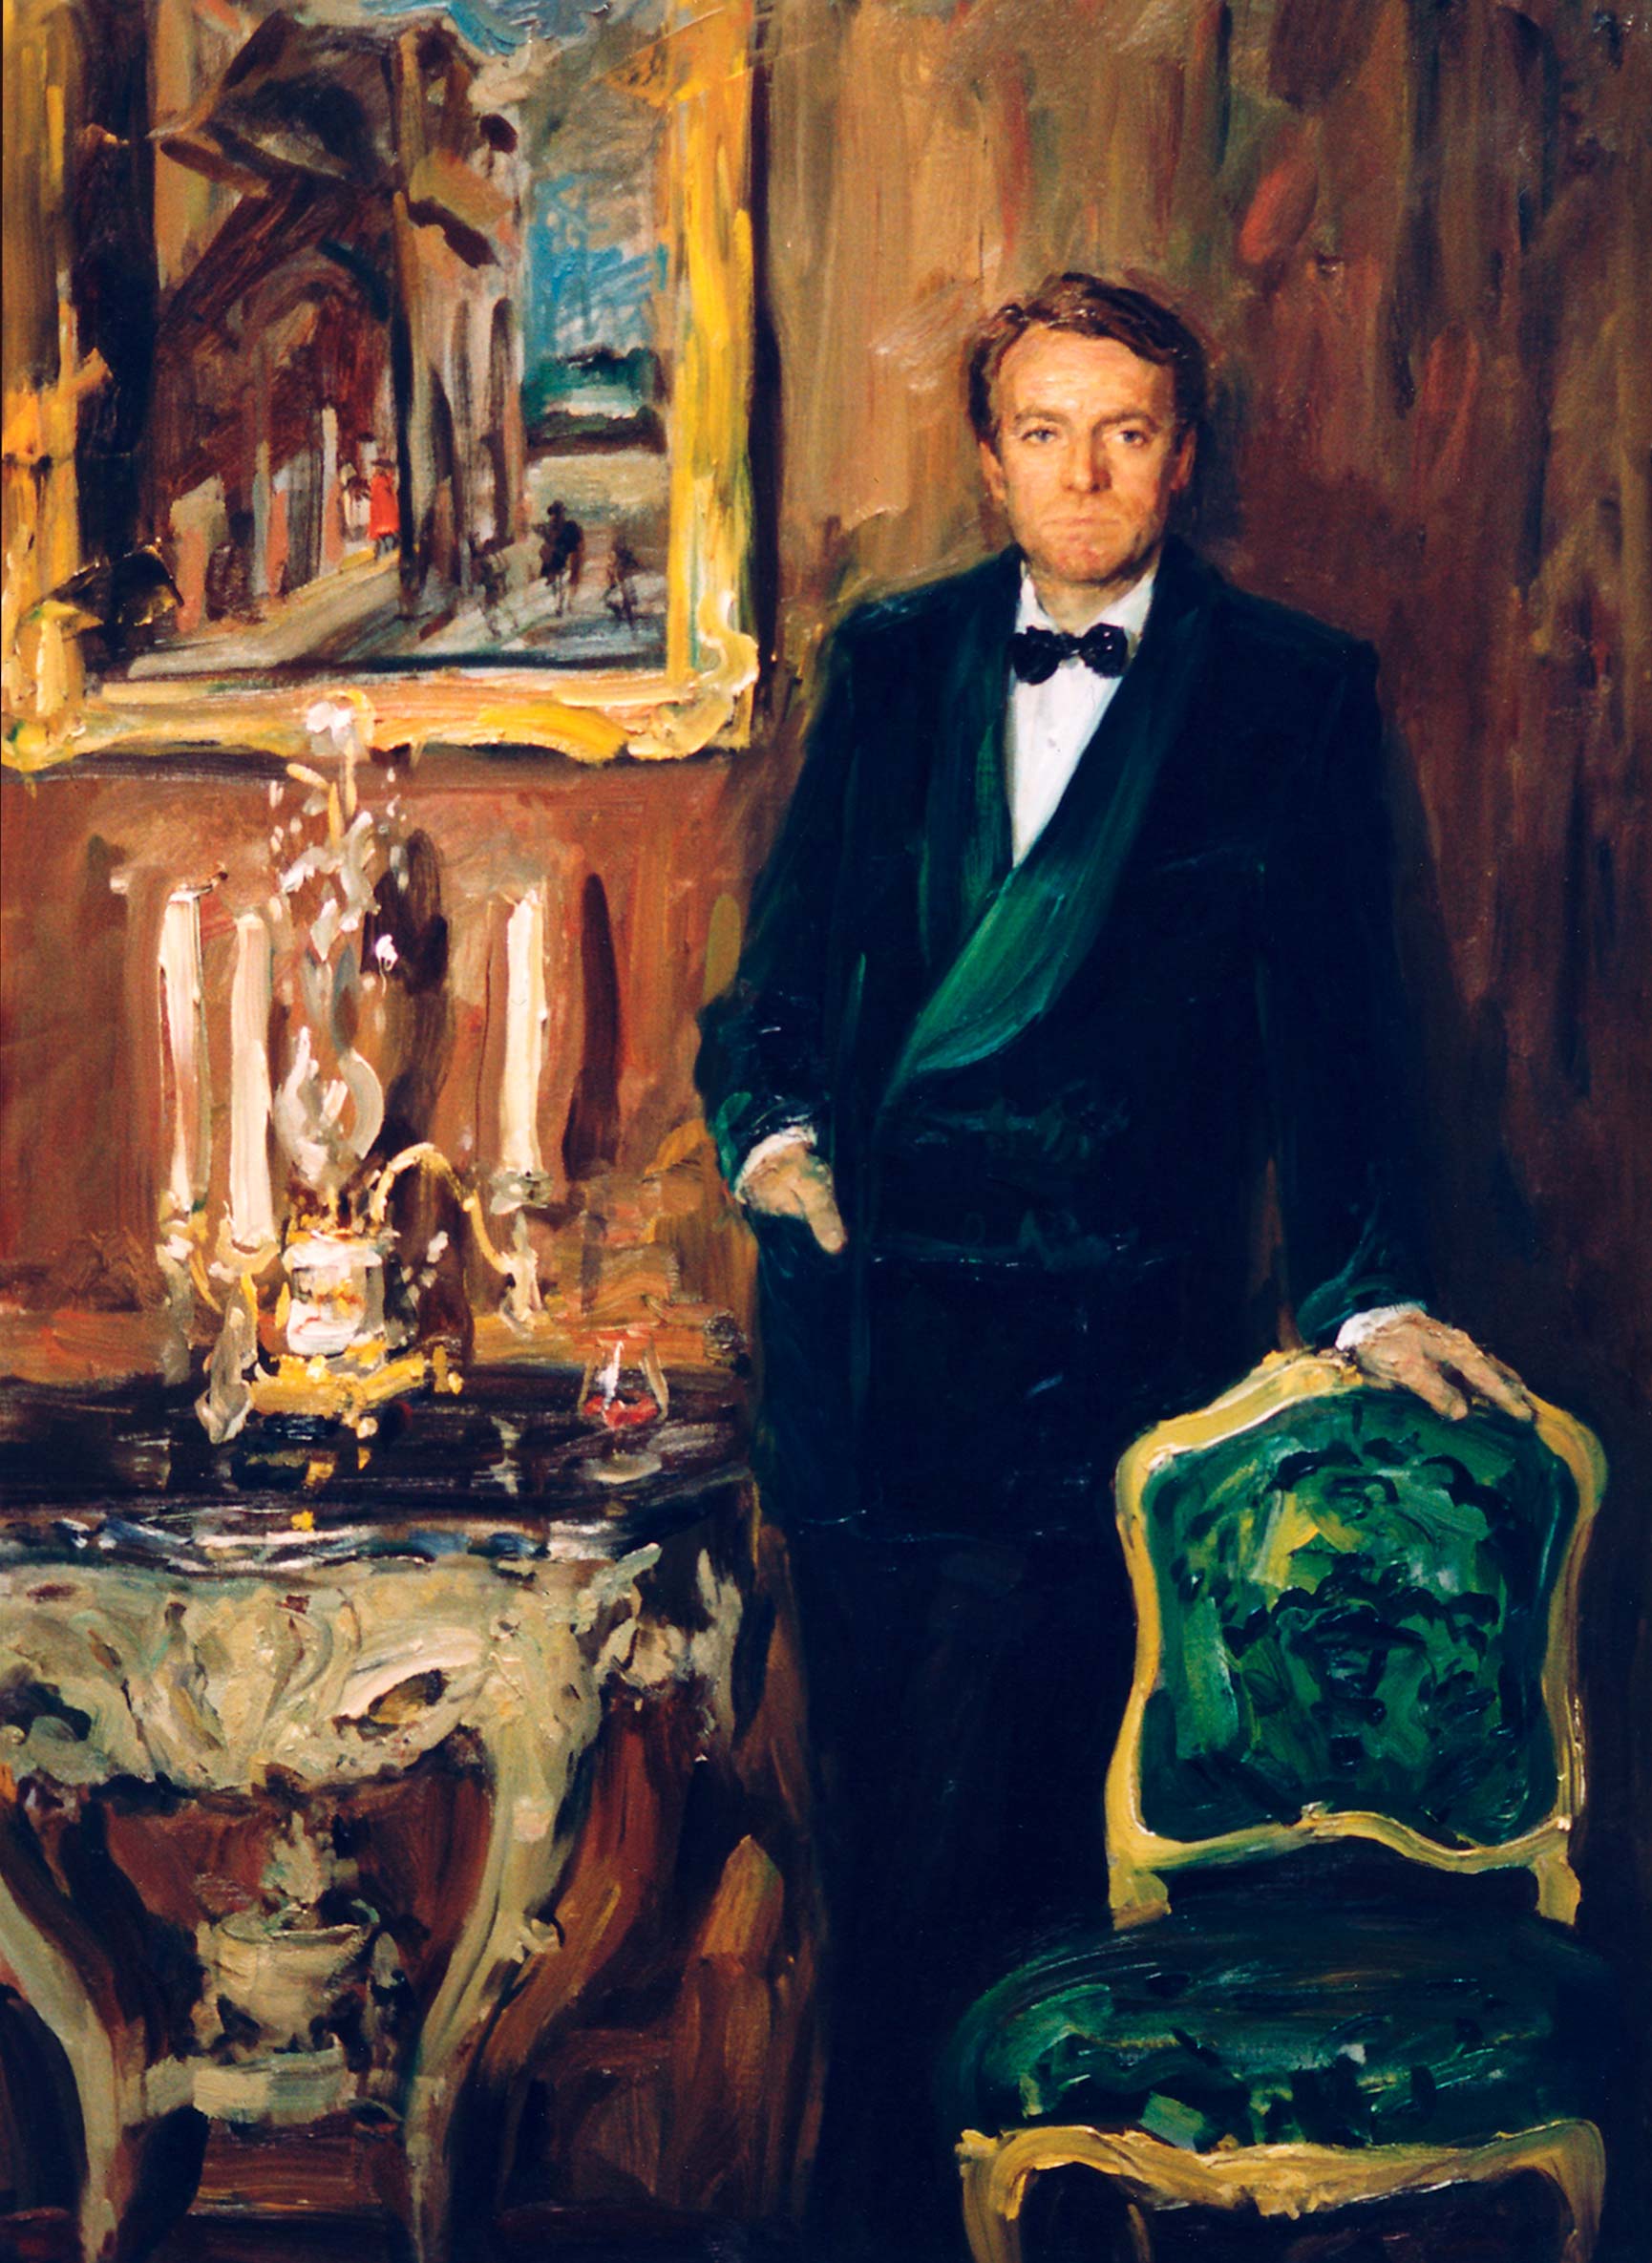 The Count - 1, Sergei Pavlenko, Buy the painting Oil